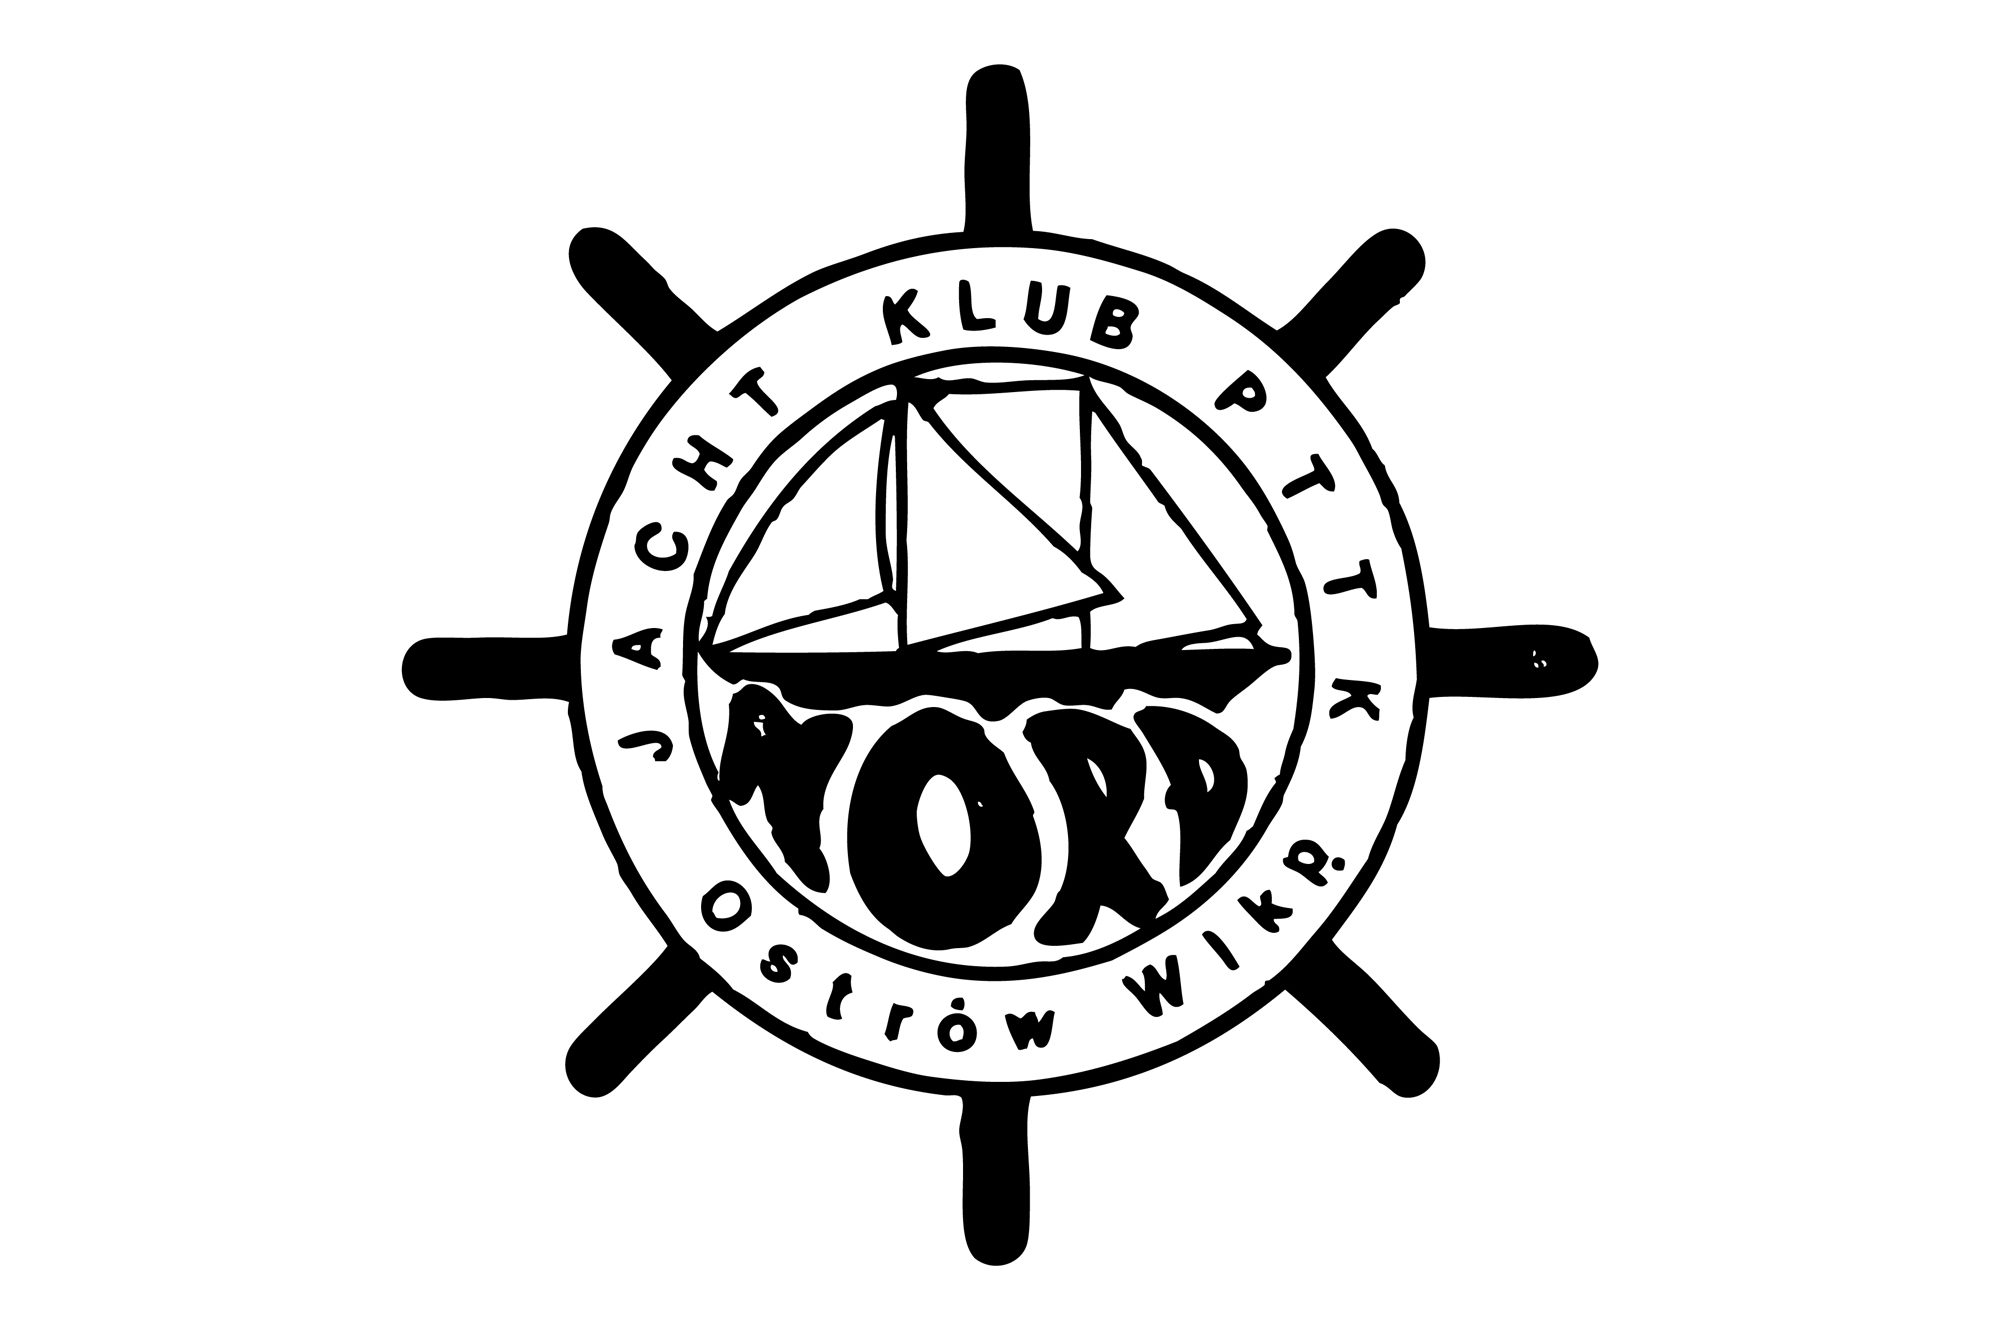 Jacht Klub NORD - logo PLANSZA 30x30cm EDYCJA